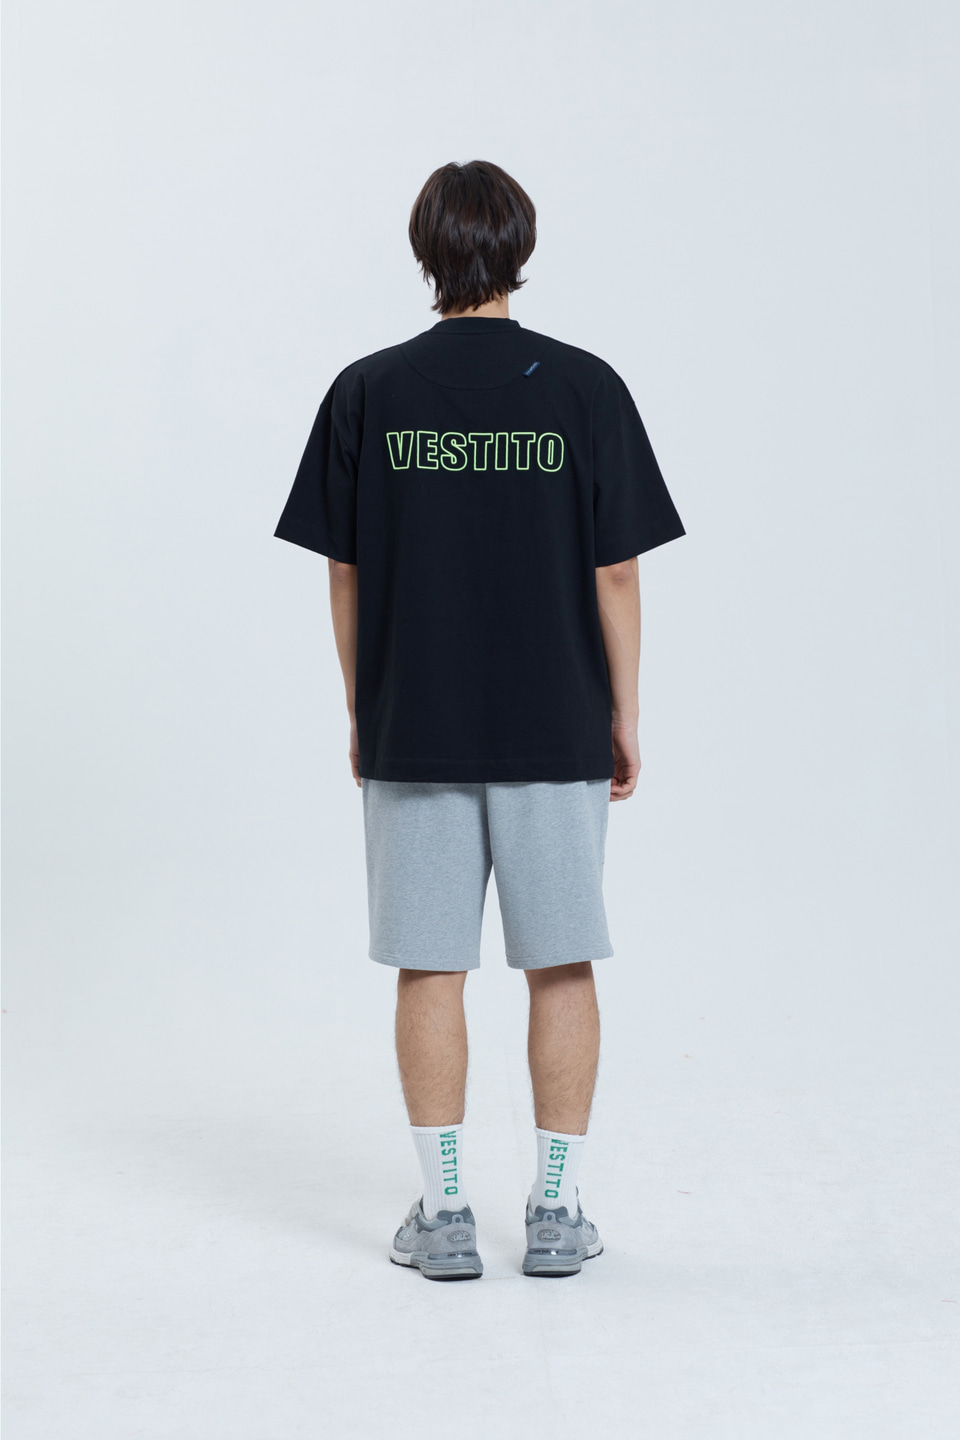 NEON VOLUME LOGO TS(네온 볼륨 로고 티셔츠)